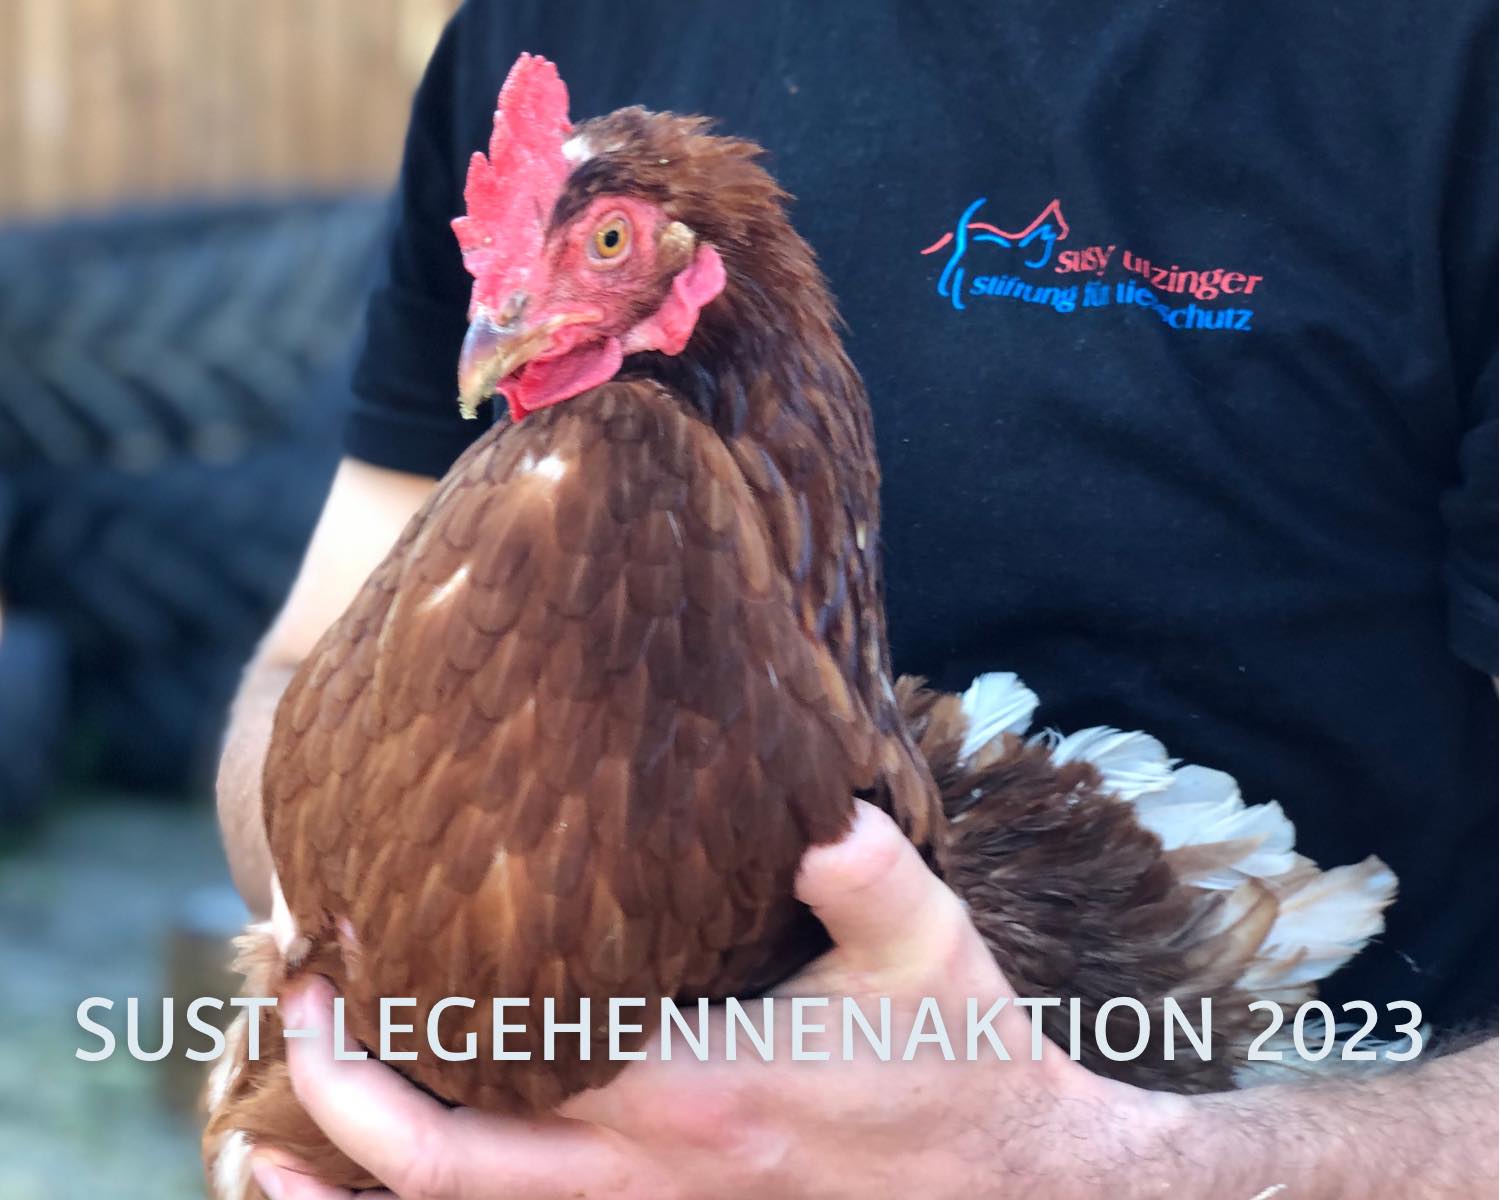 700 laying hens saved...